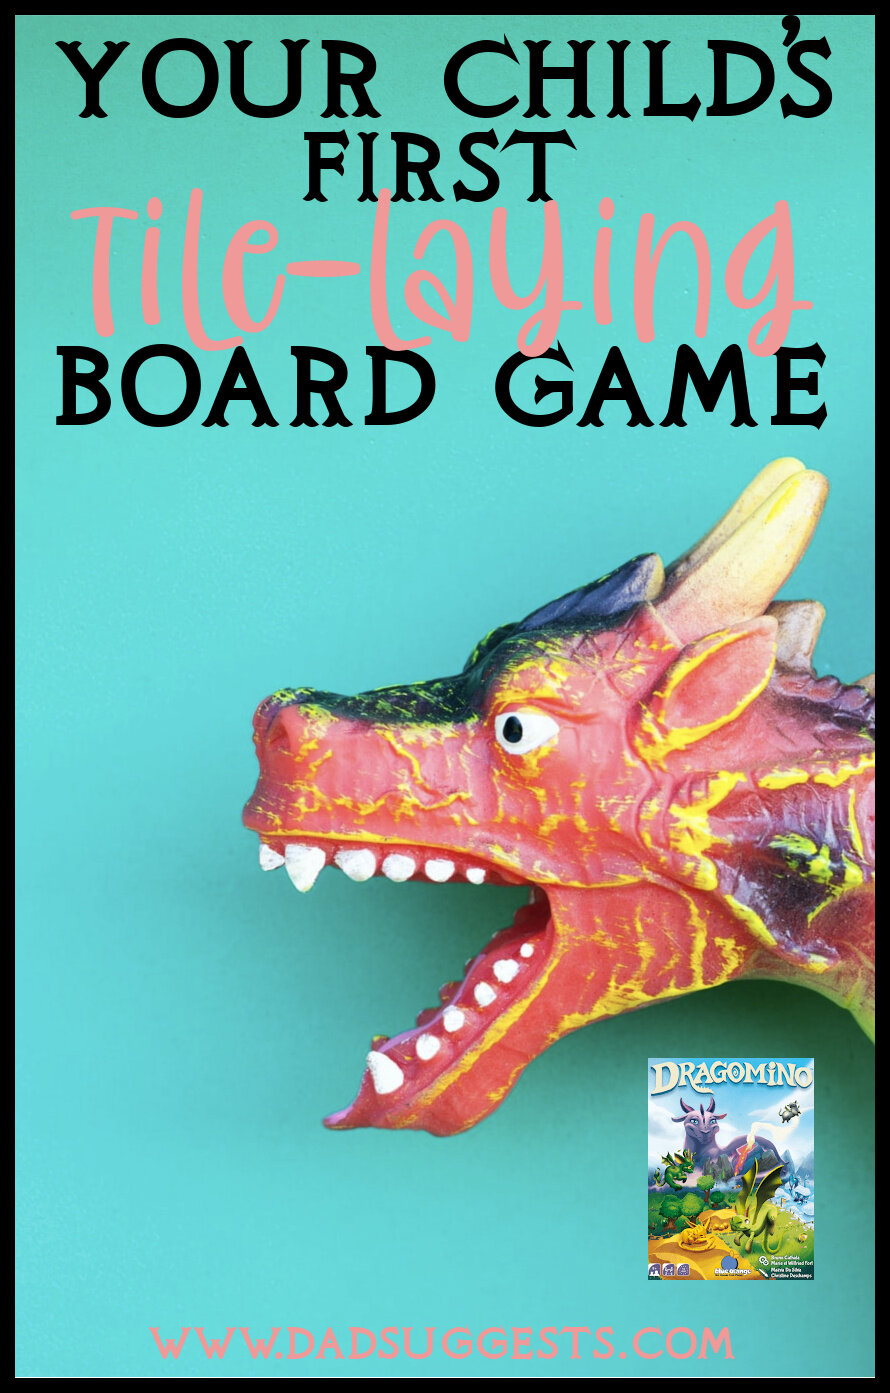 Train baby dragons in the next Kingdomino board game, Dragomino